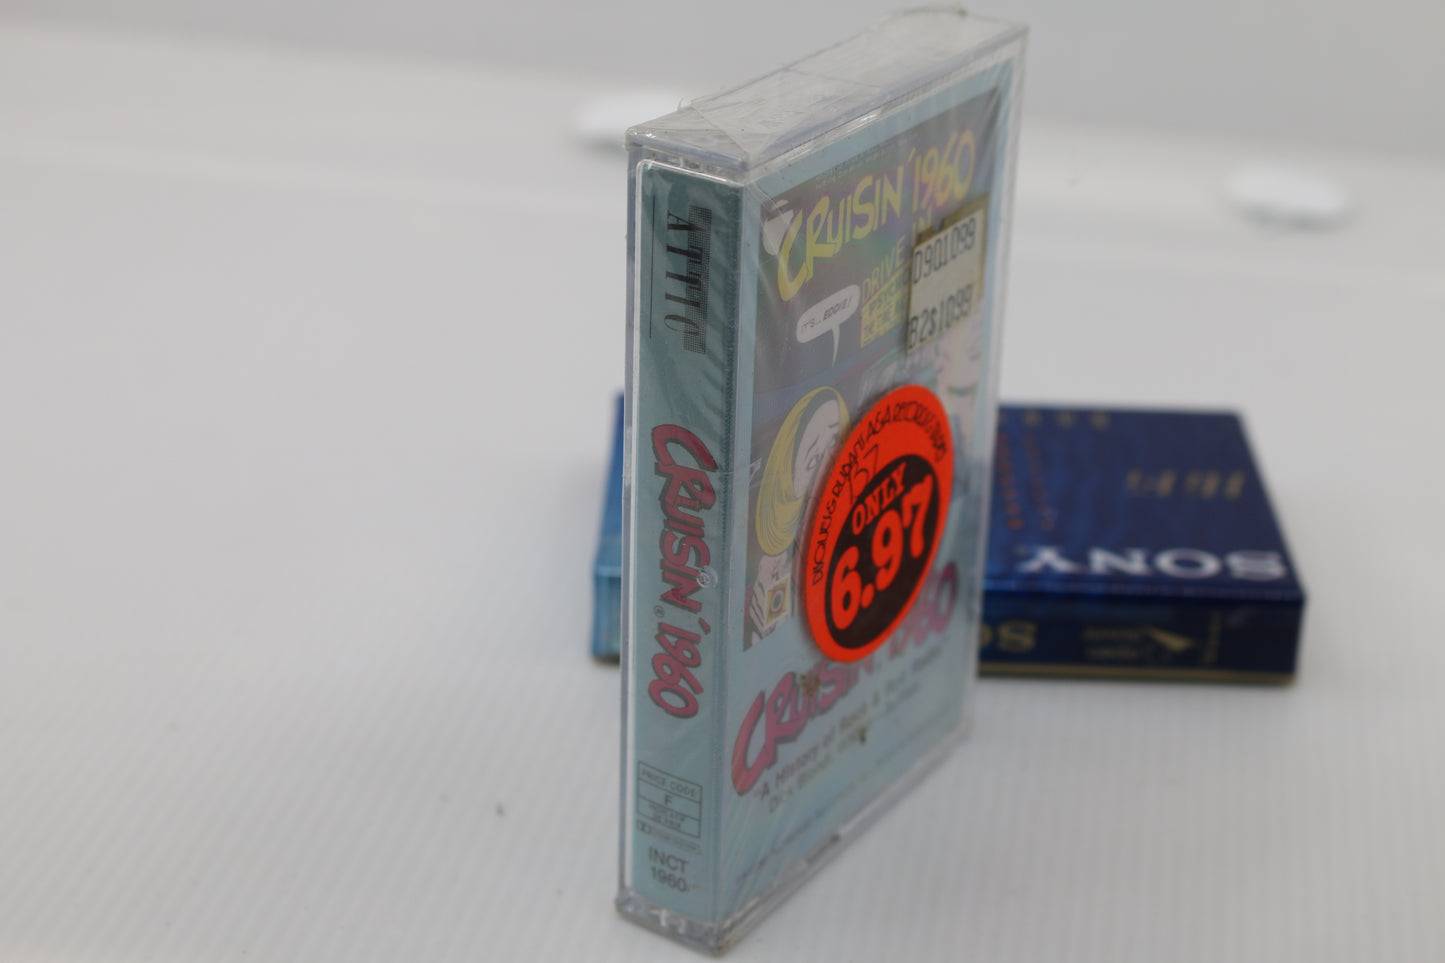 Cruisin' 1960 A History Of Rock ‘N’ Roll Radio Cassette Tape Dick Biondi